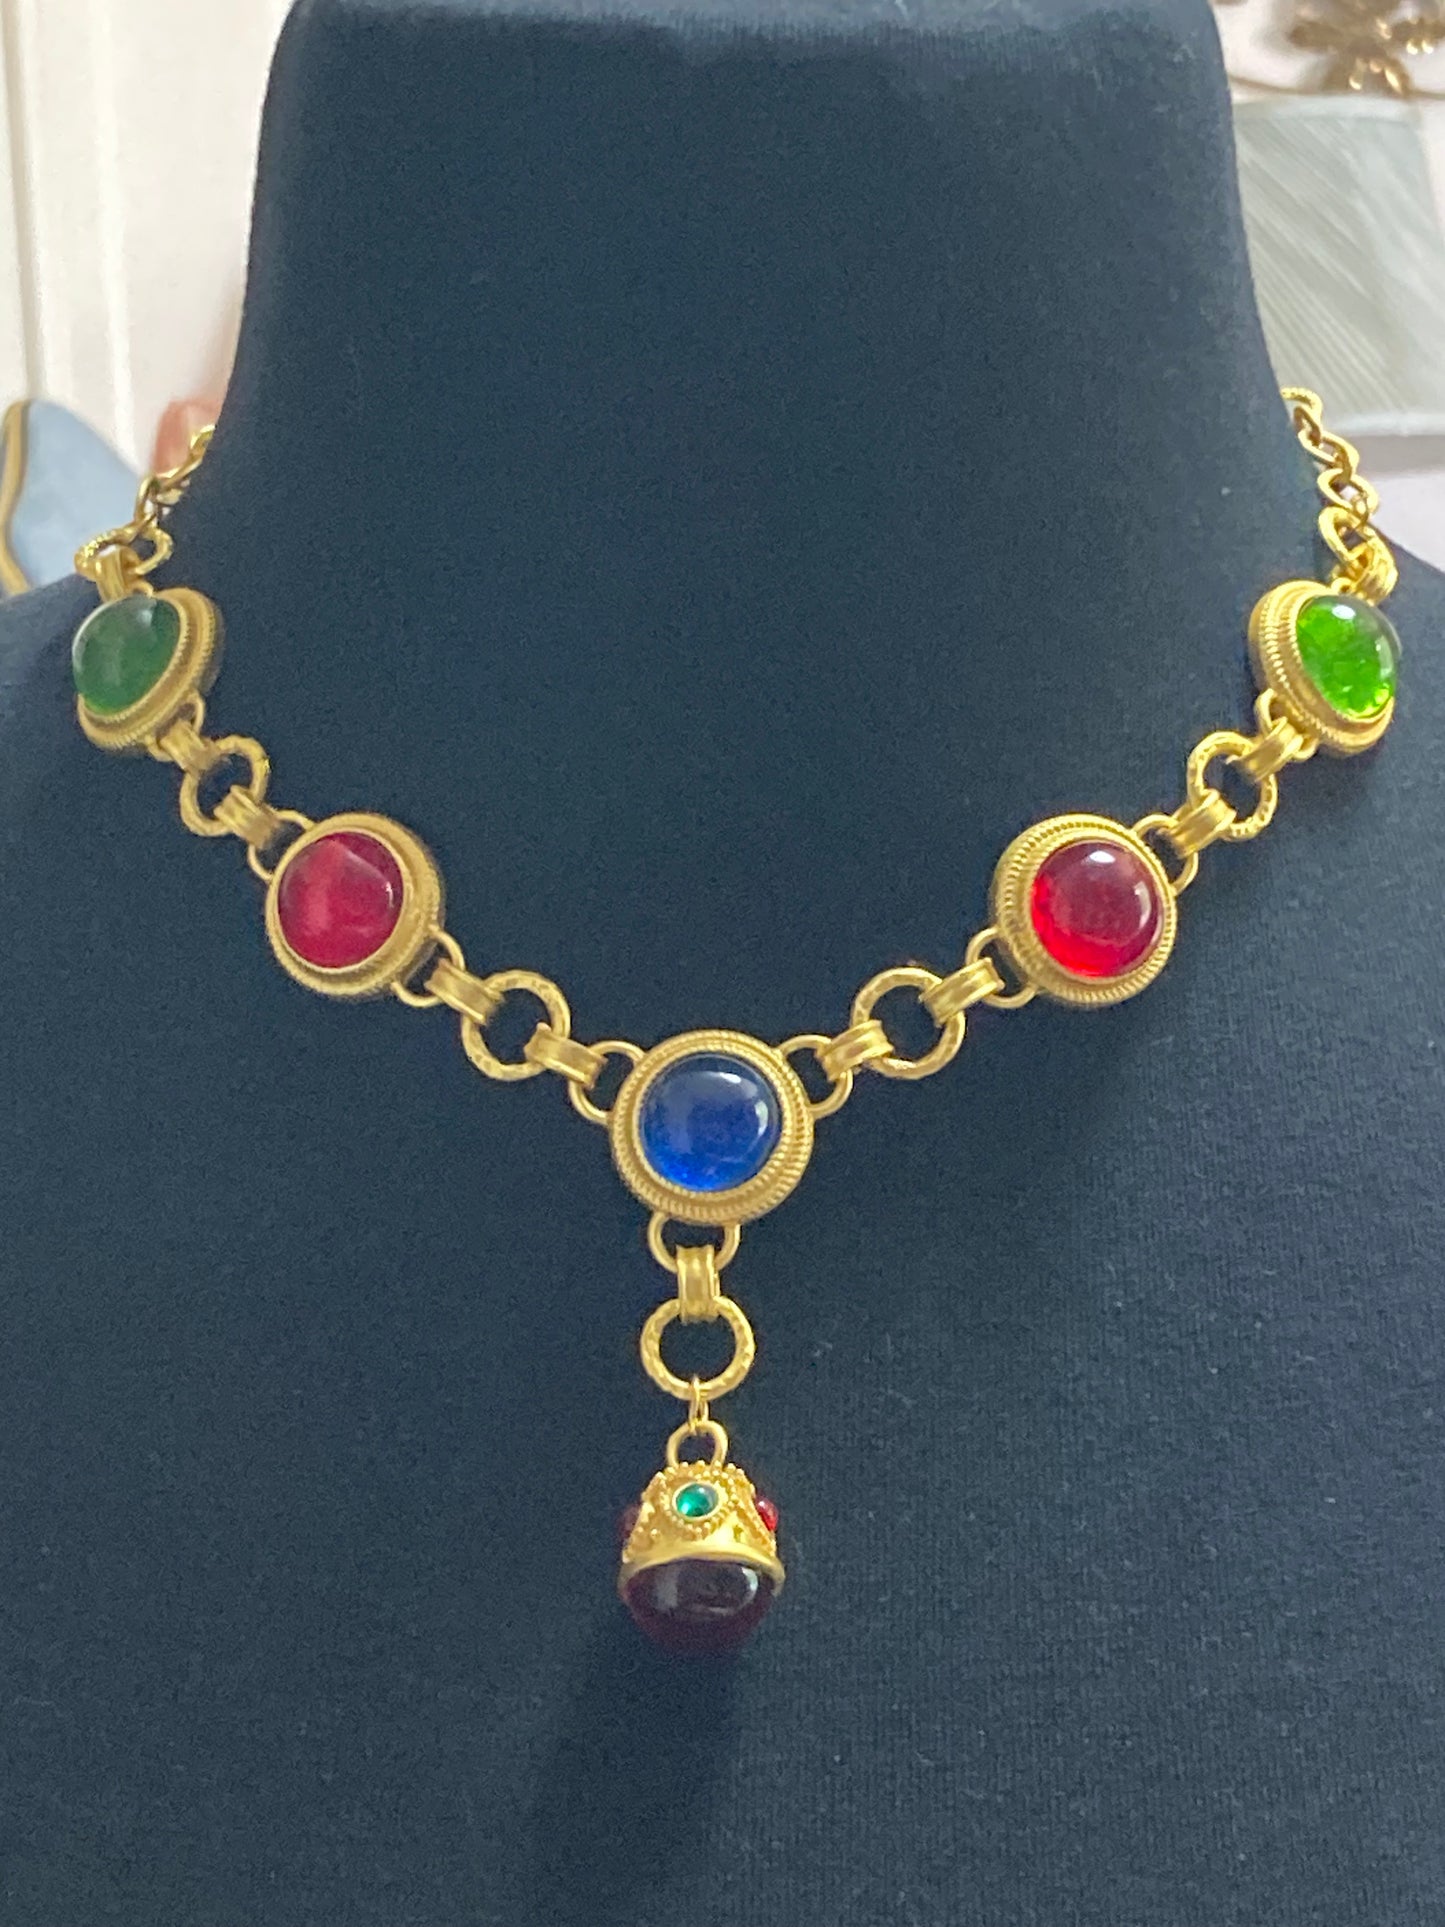 Etruscan glass cabochon gripoix style necklace